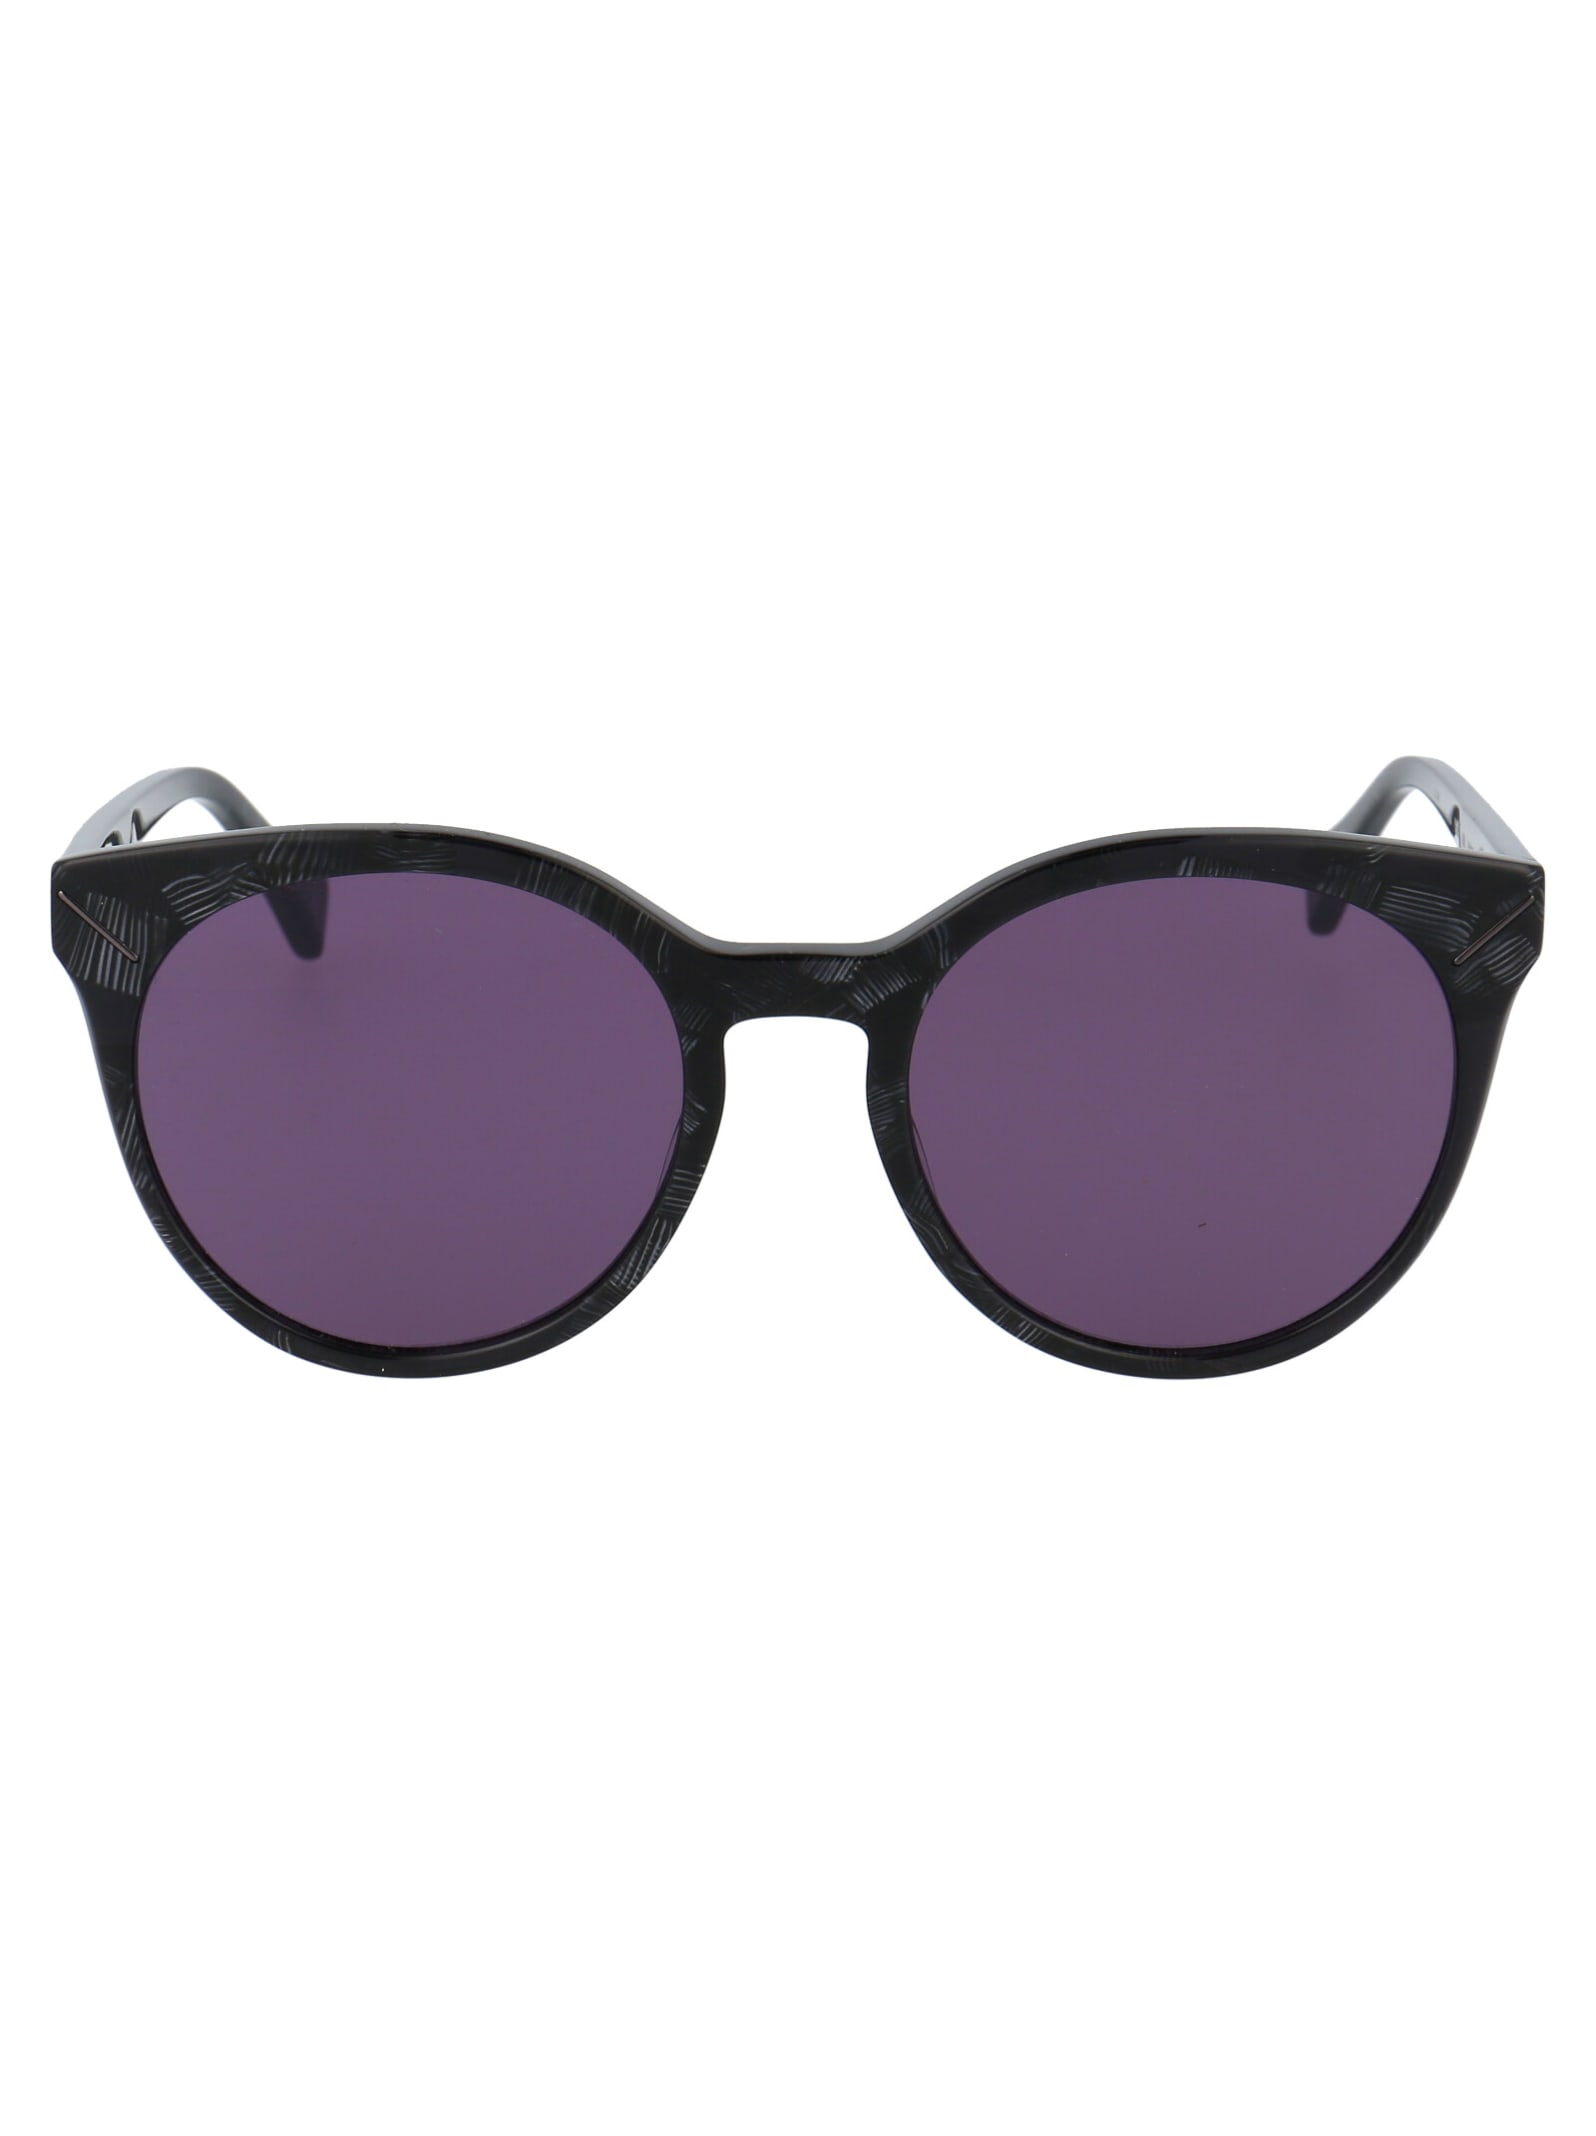 Yohji Yamamoto Ys5003 Sunglasses